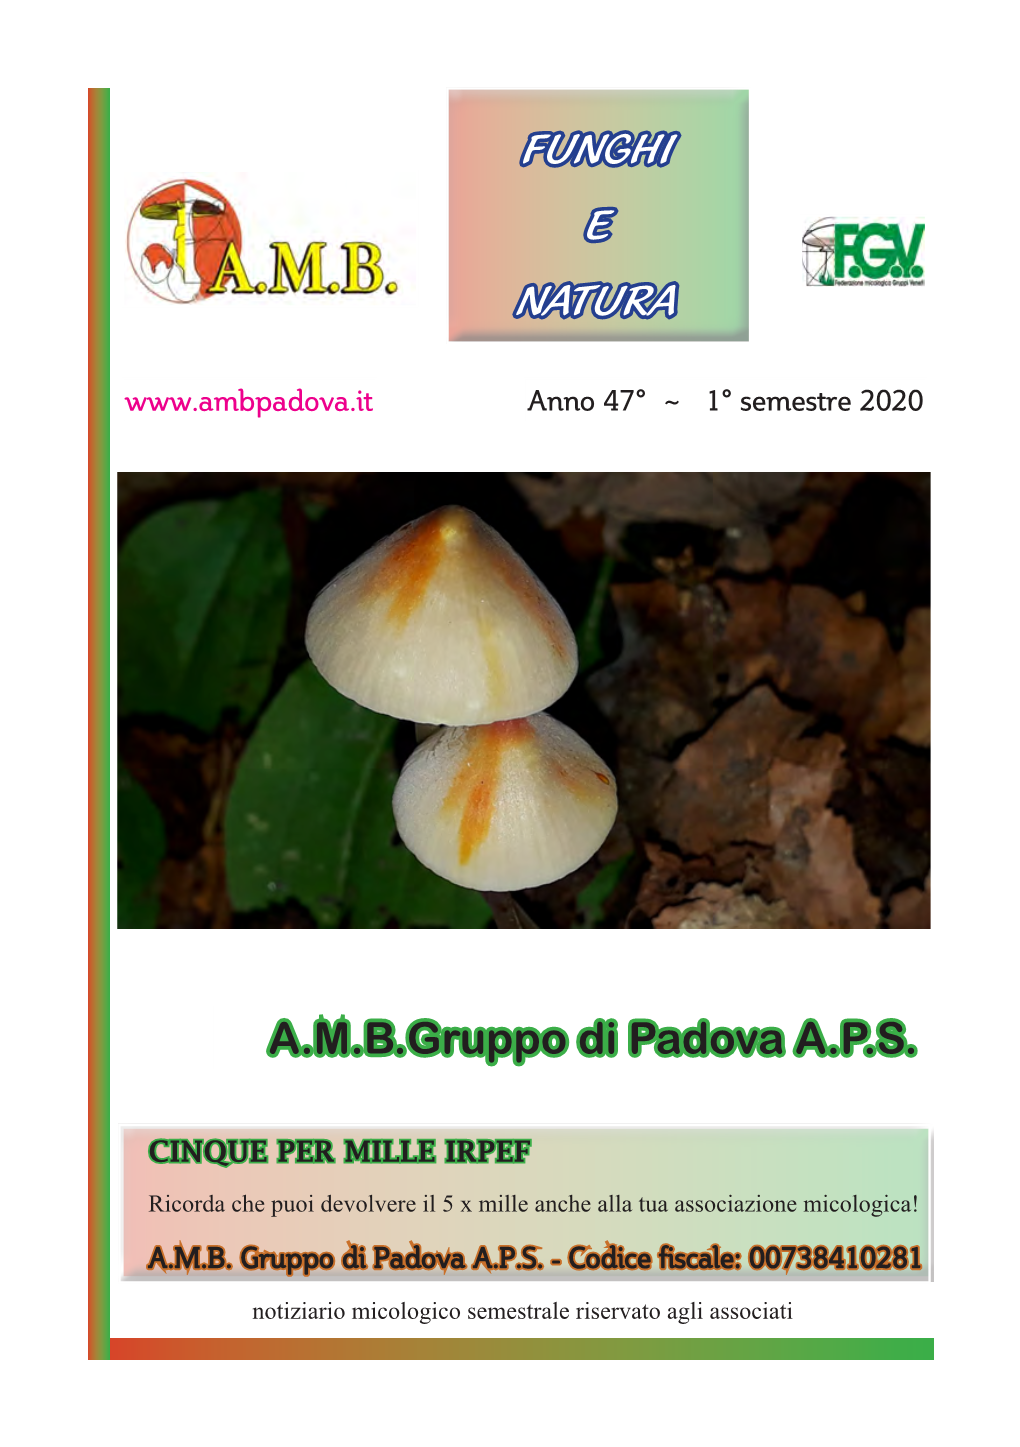 Funghi E Natura A.M.B.Gruppo Di Padova A.P.S